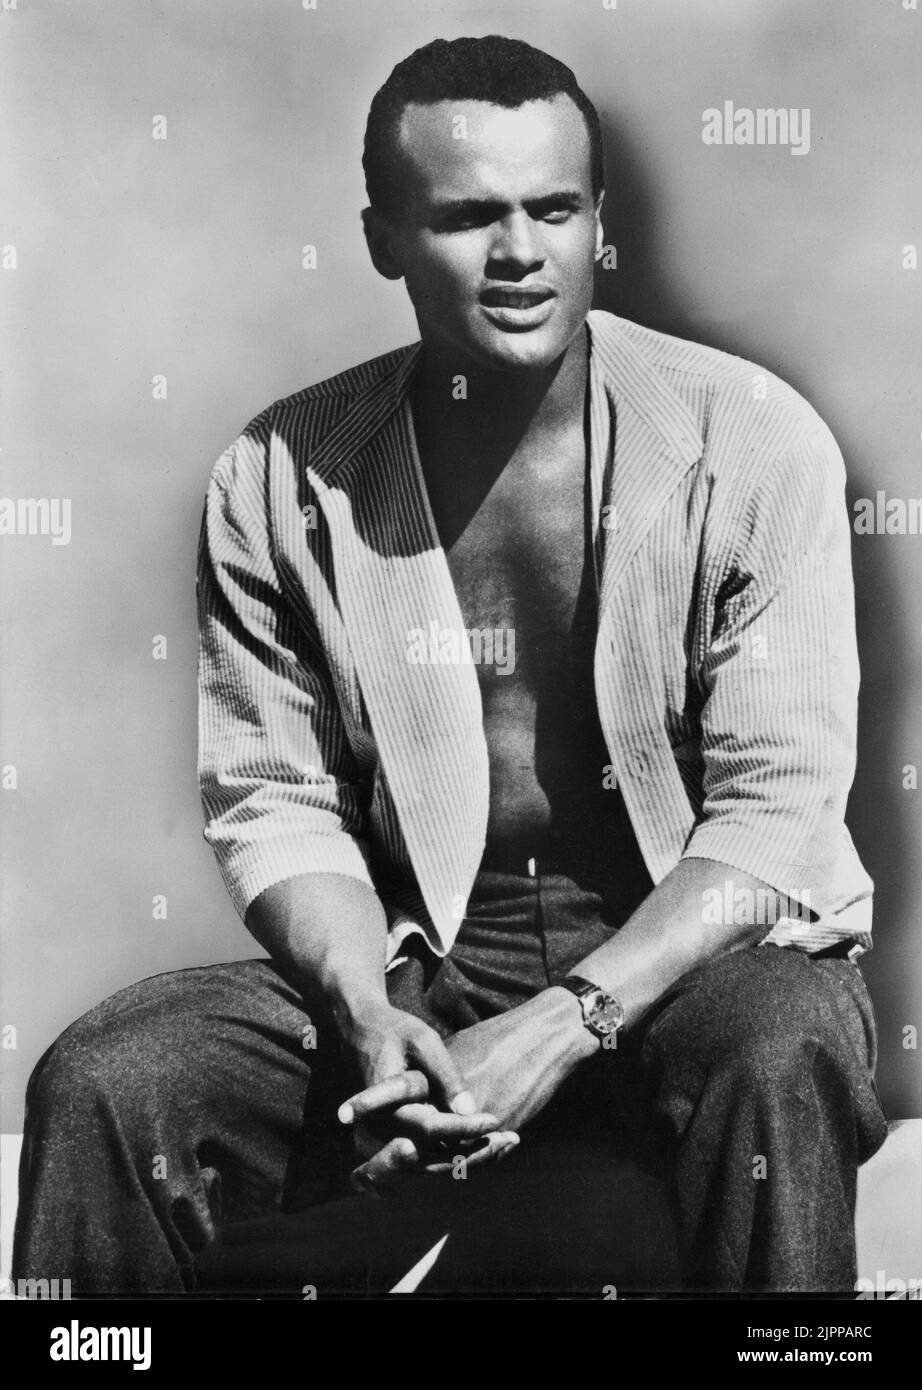 1954 , ÉTATS-UNIS : L'acteur et chanteur HARRY BELAFONTE ( New York , NY 1 mars 1927 ) - MUSIQUE POP - MUSICA - CINÉMA - calypso rock - portrait - ritratto - Bellafonte - torso nudo - barechested - cantante - orologio da polso - Swatch - attore di colore -- -- Archivio GBB Banque D'Images